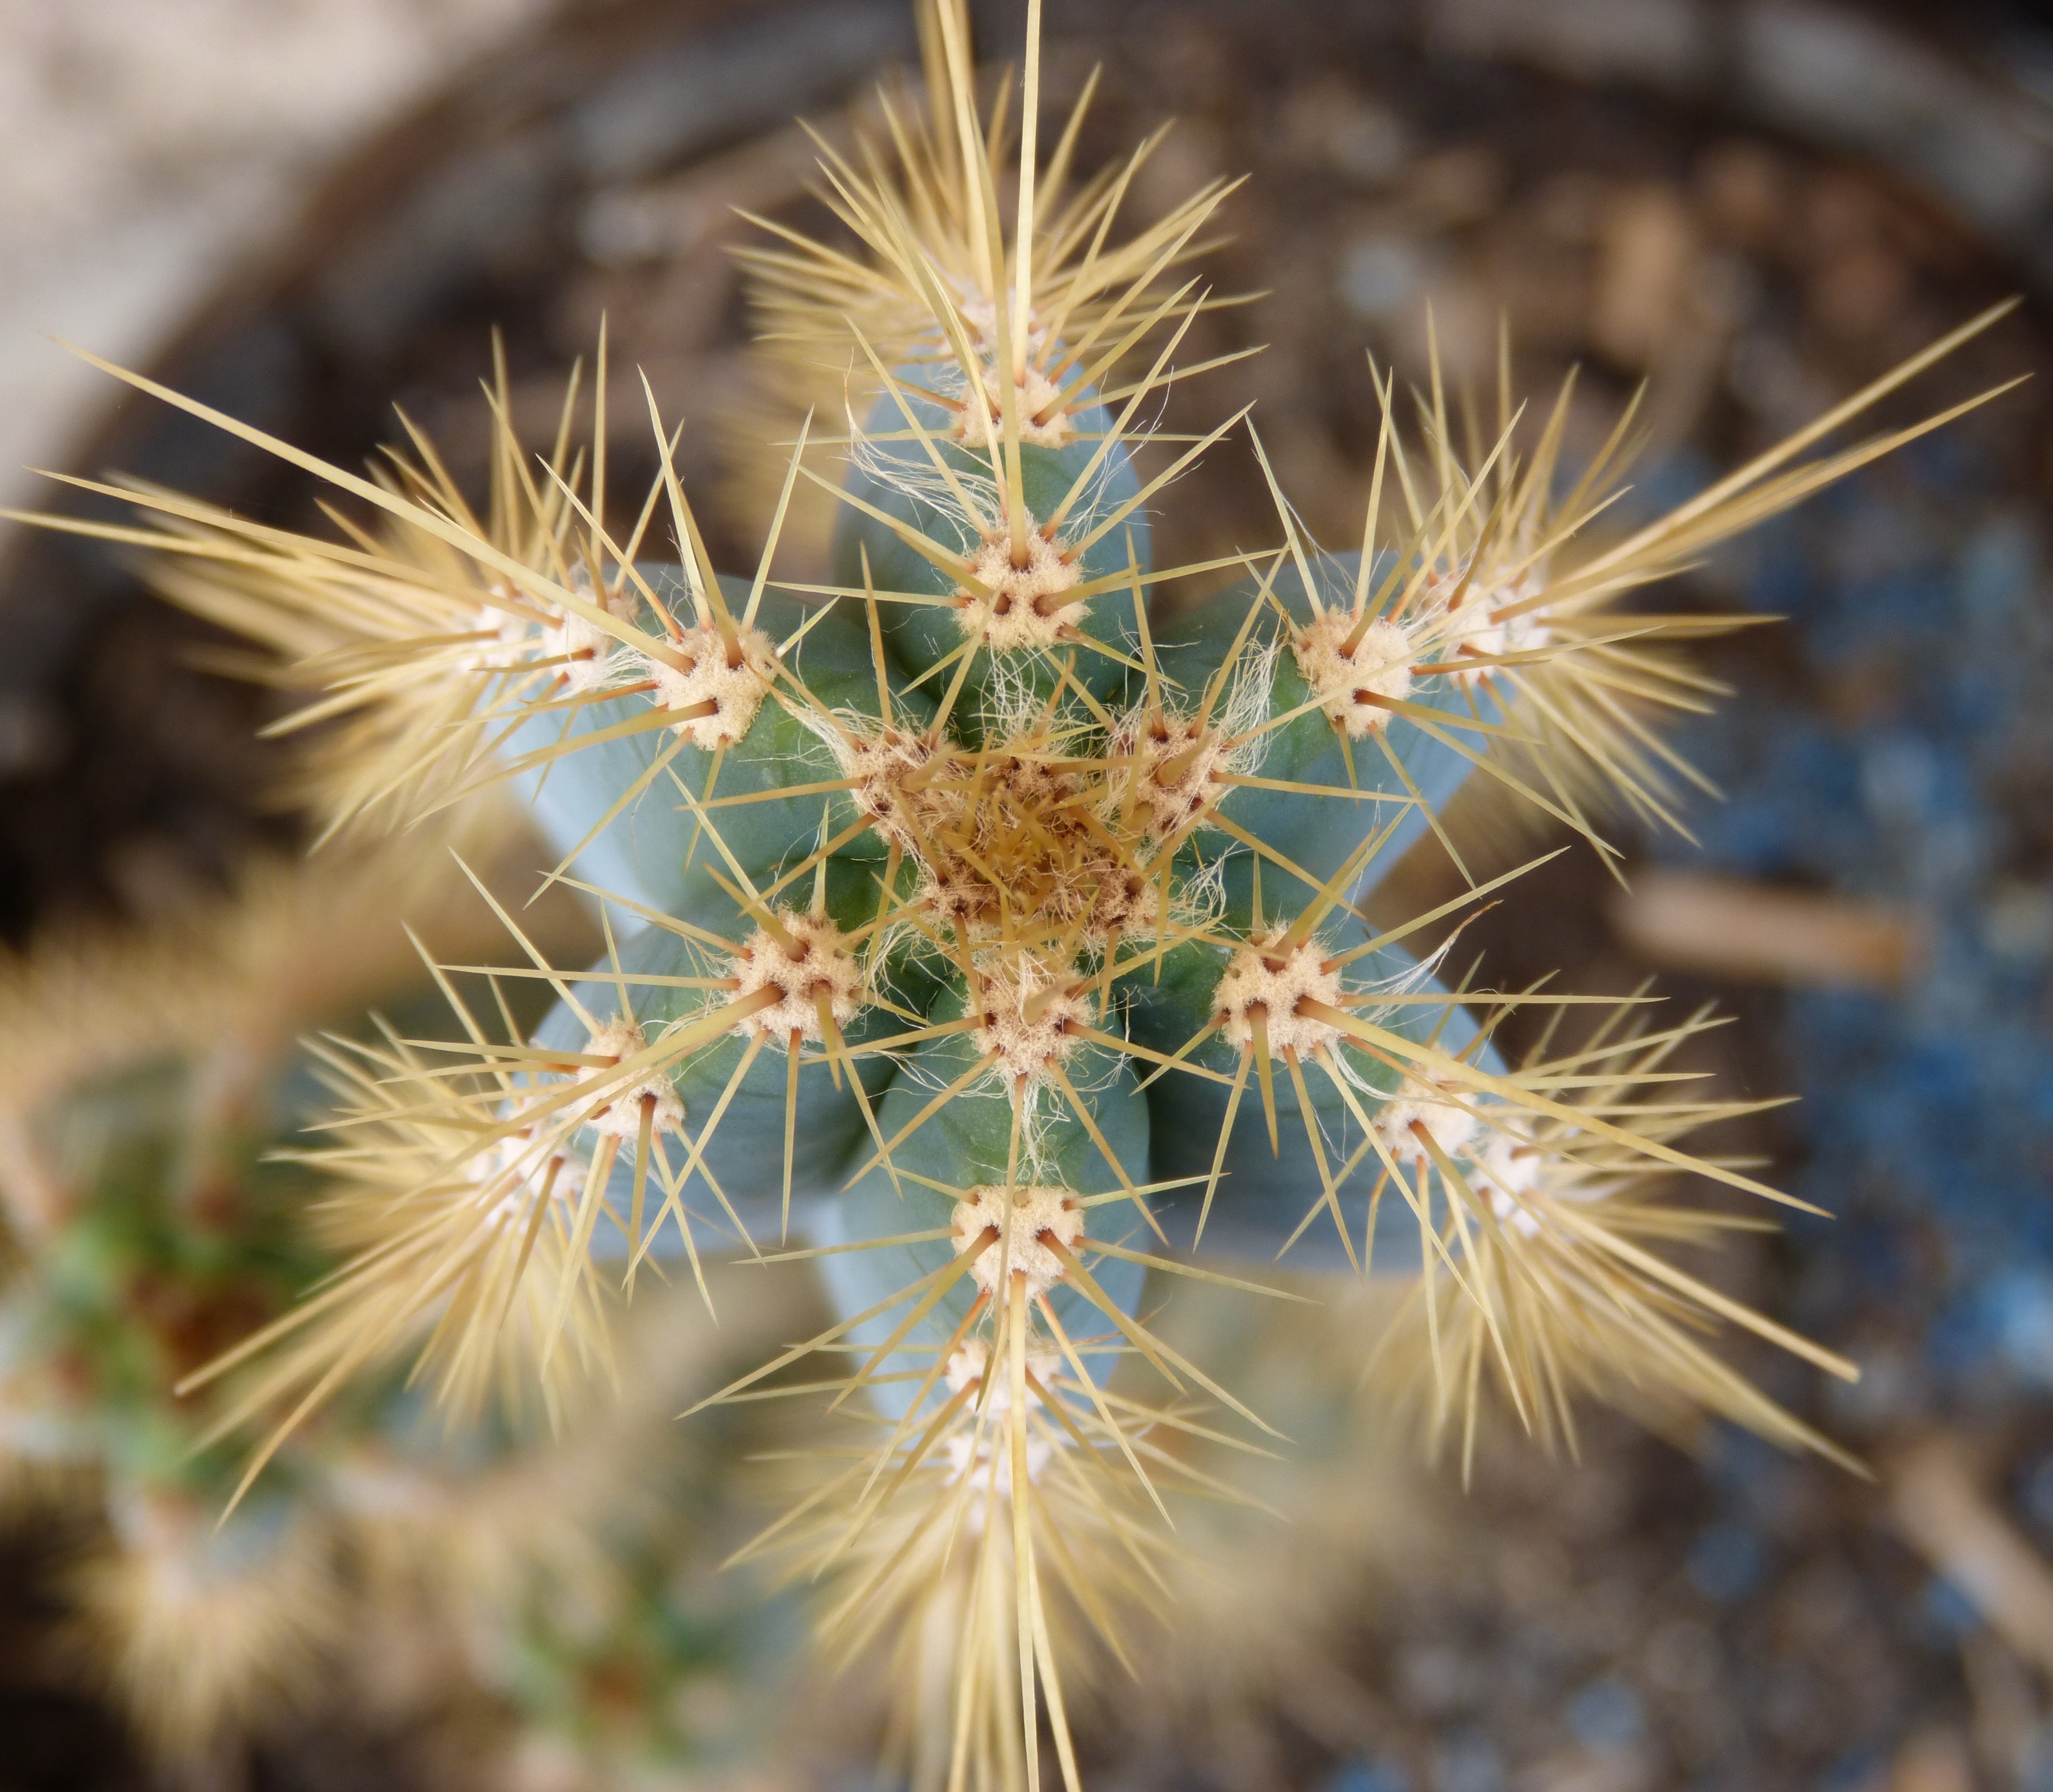 Overhead View, Thorns, Cactus, Skewers, thorn, cactus